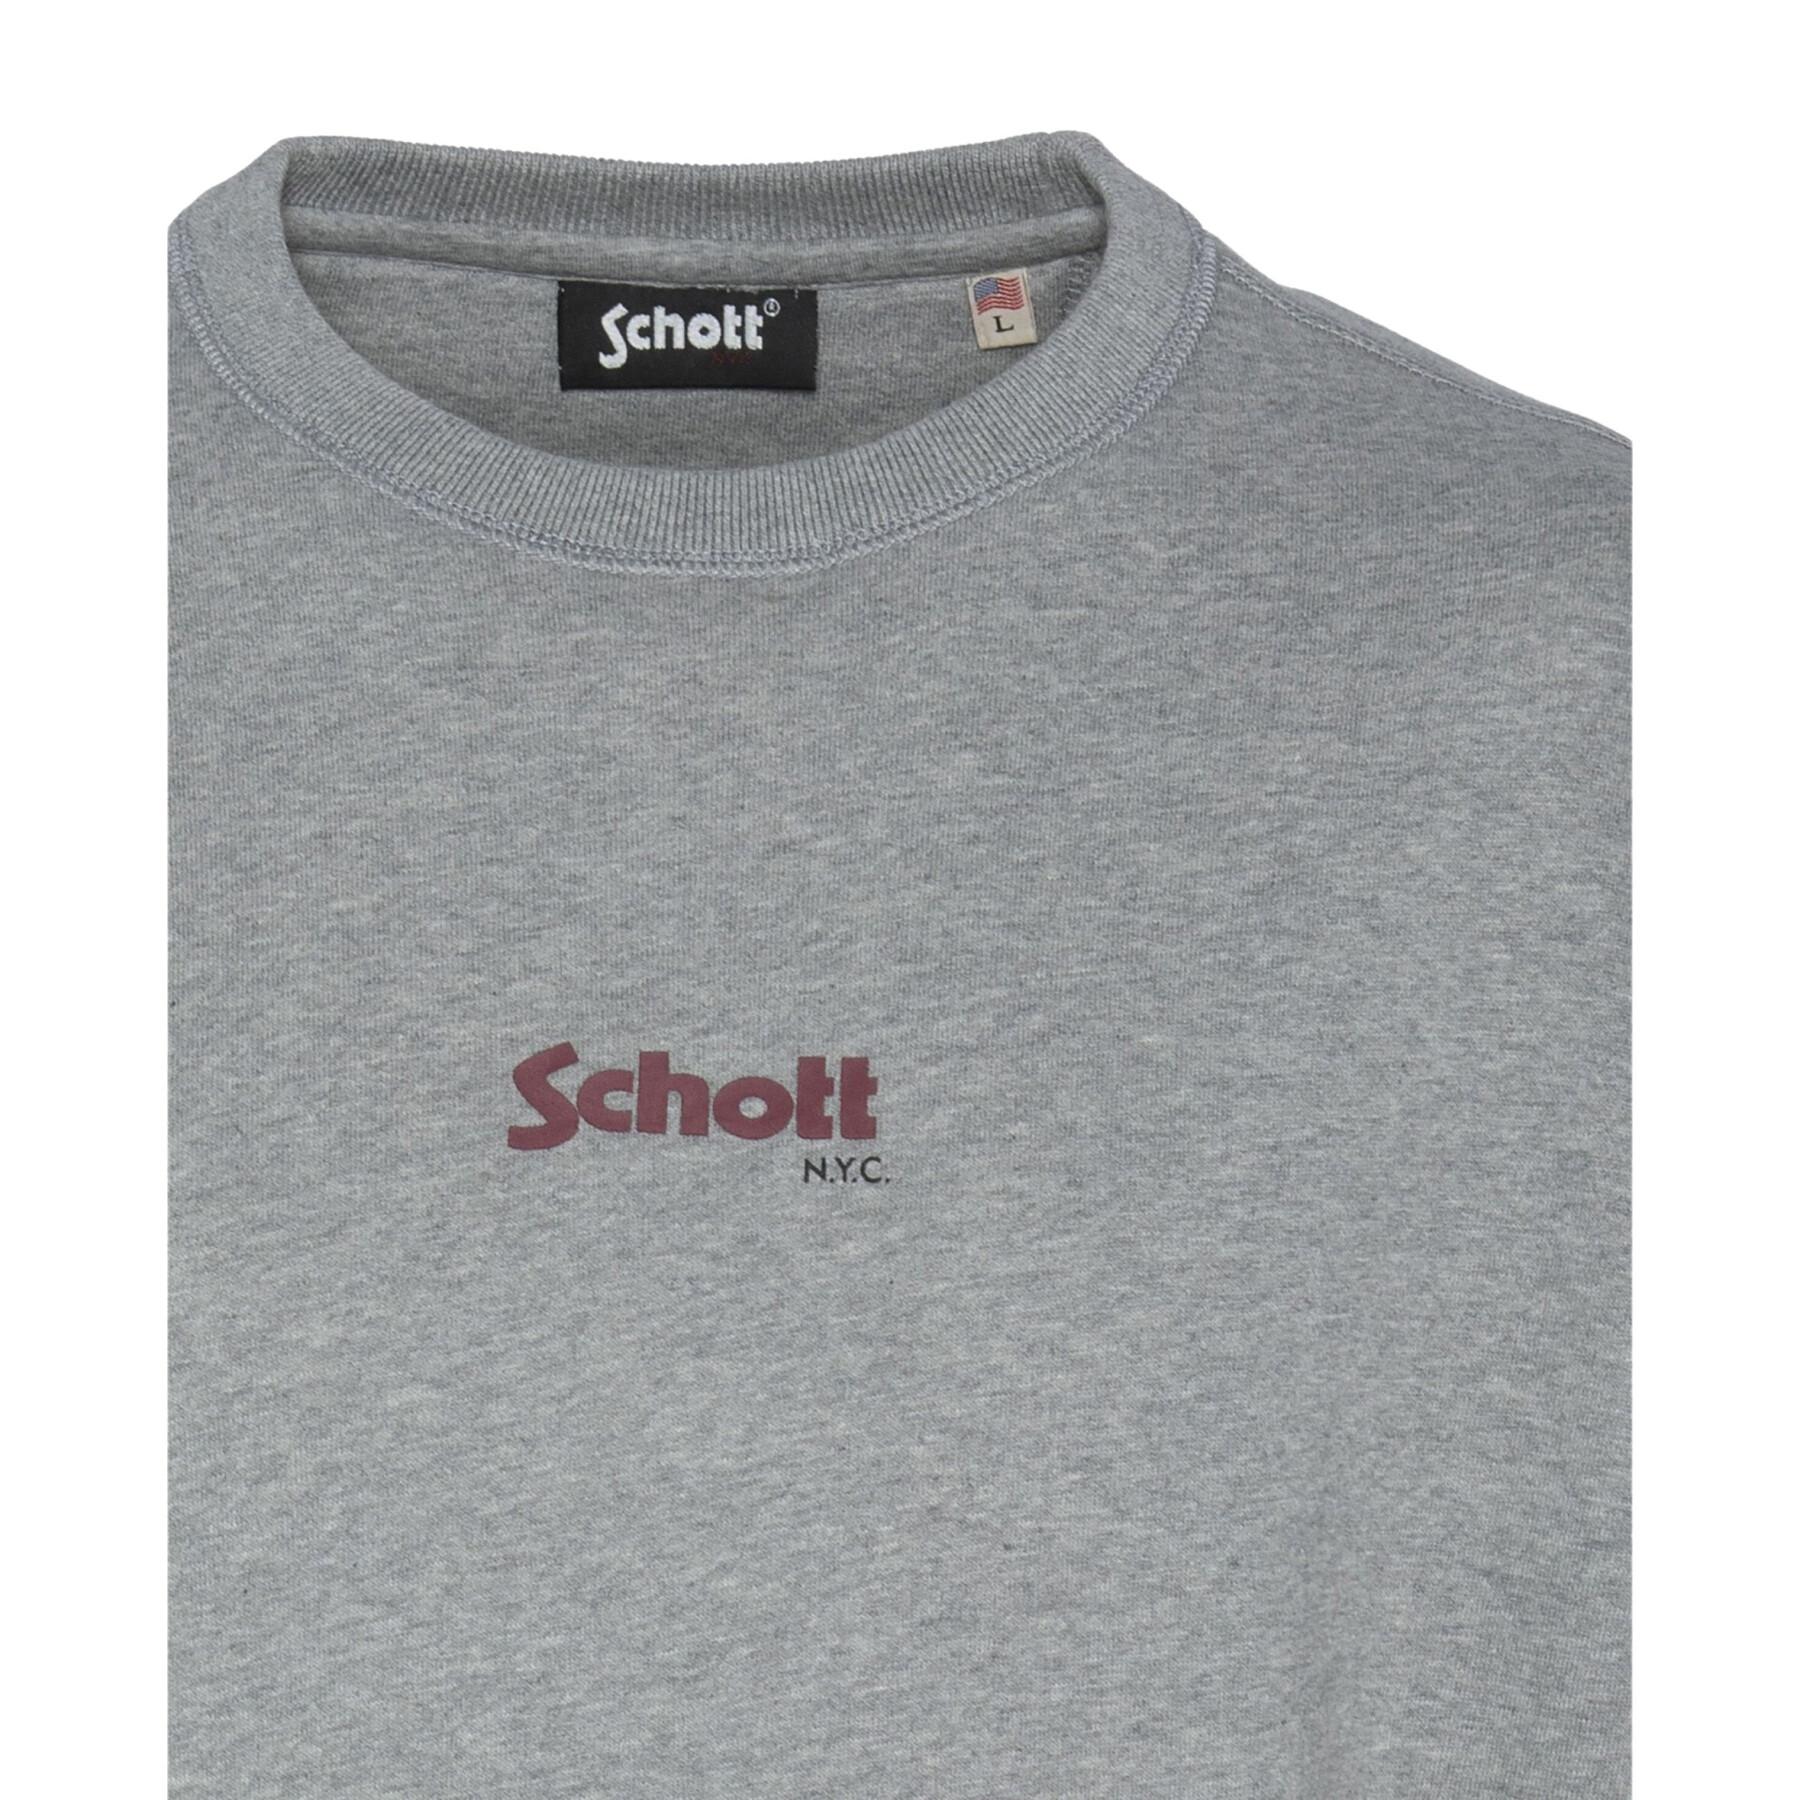 Sweatshirt rdc baú pequeno logotipo Schott